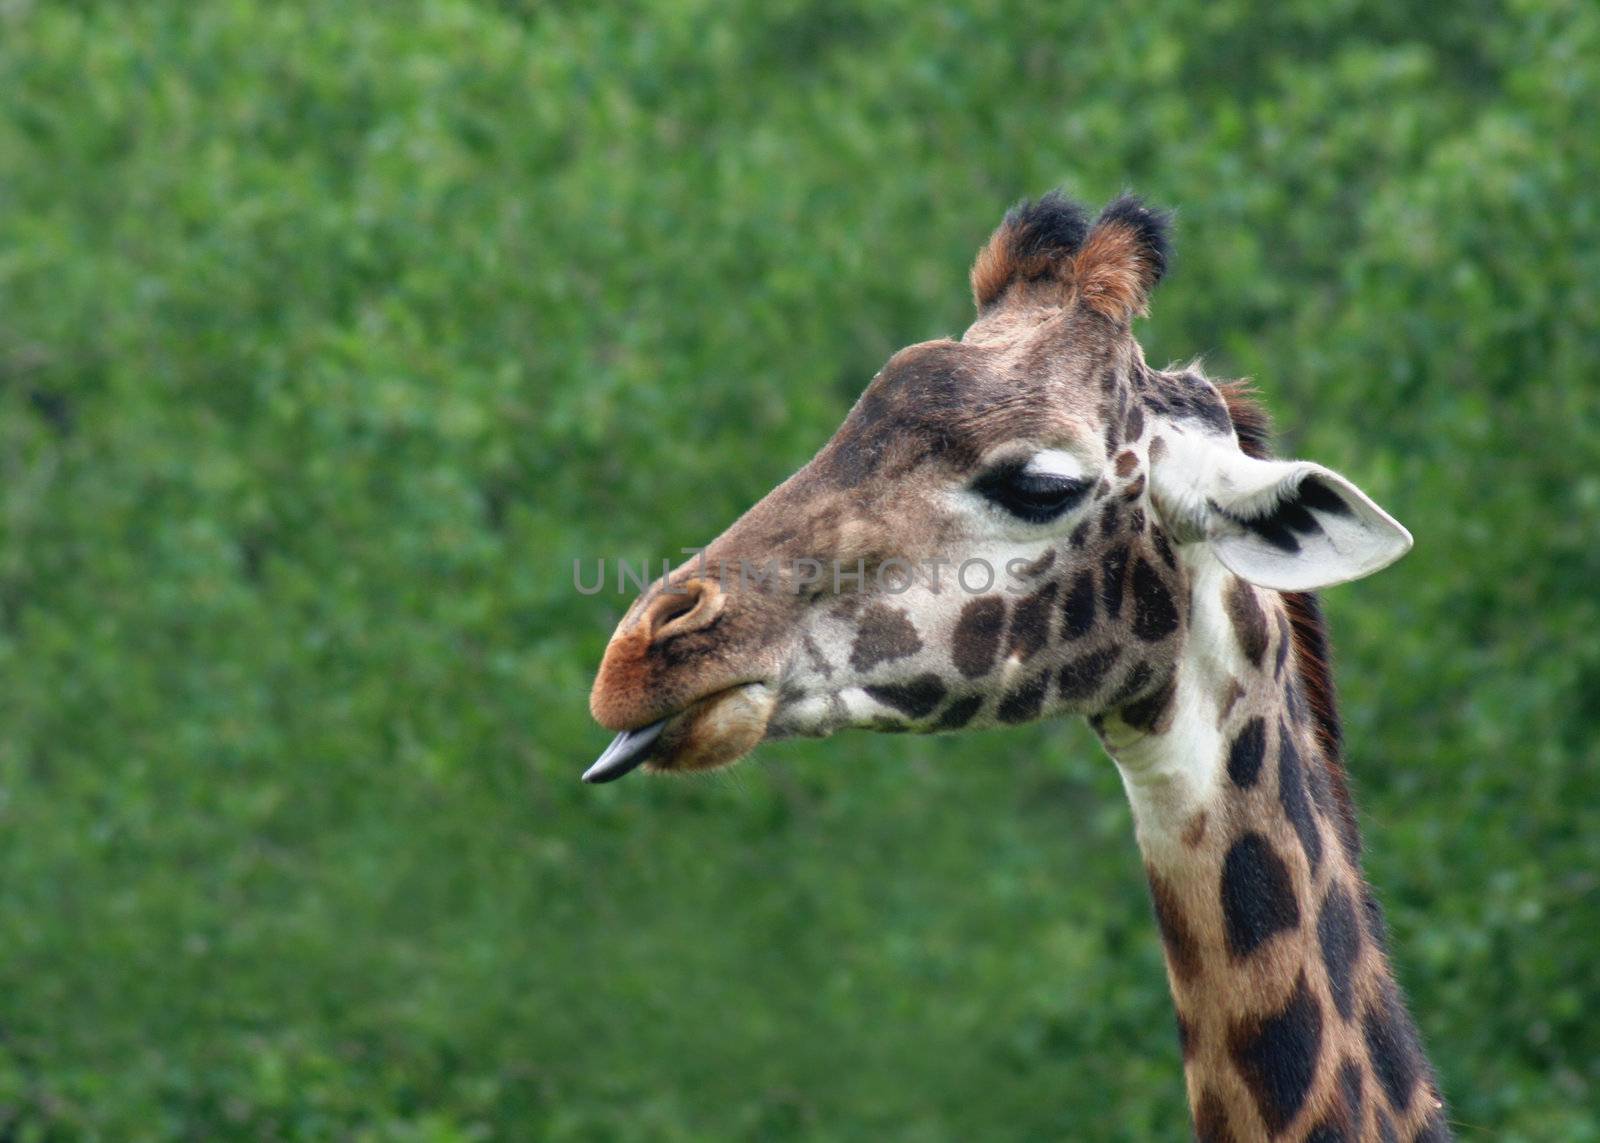 A giraffe sticking out it's tongue.